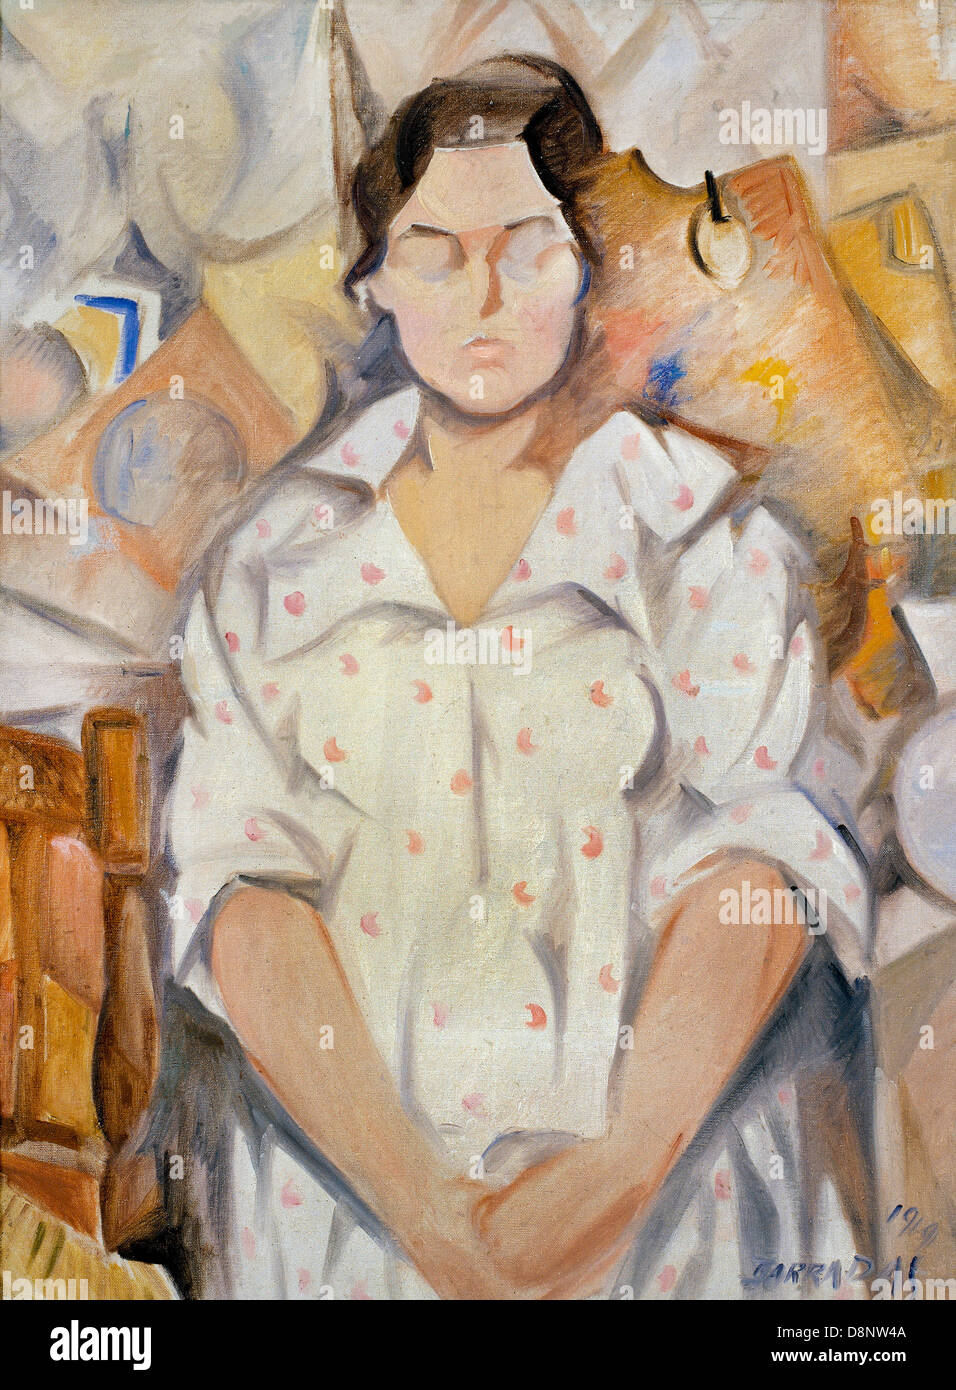 Rafael Barradas, Porträt von Pilar 1919 Öl auf Leinwand. Museu Nacional d ' Art de Catalunya, Barcelona, Spanien. Stockfoto